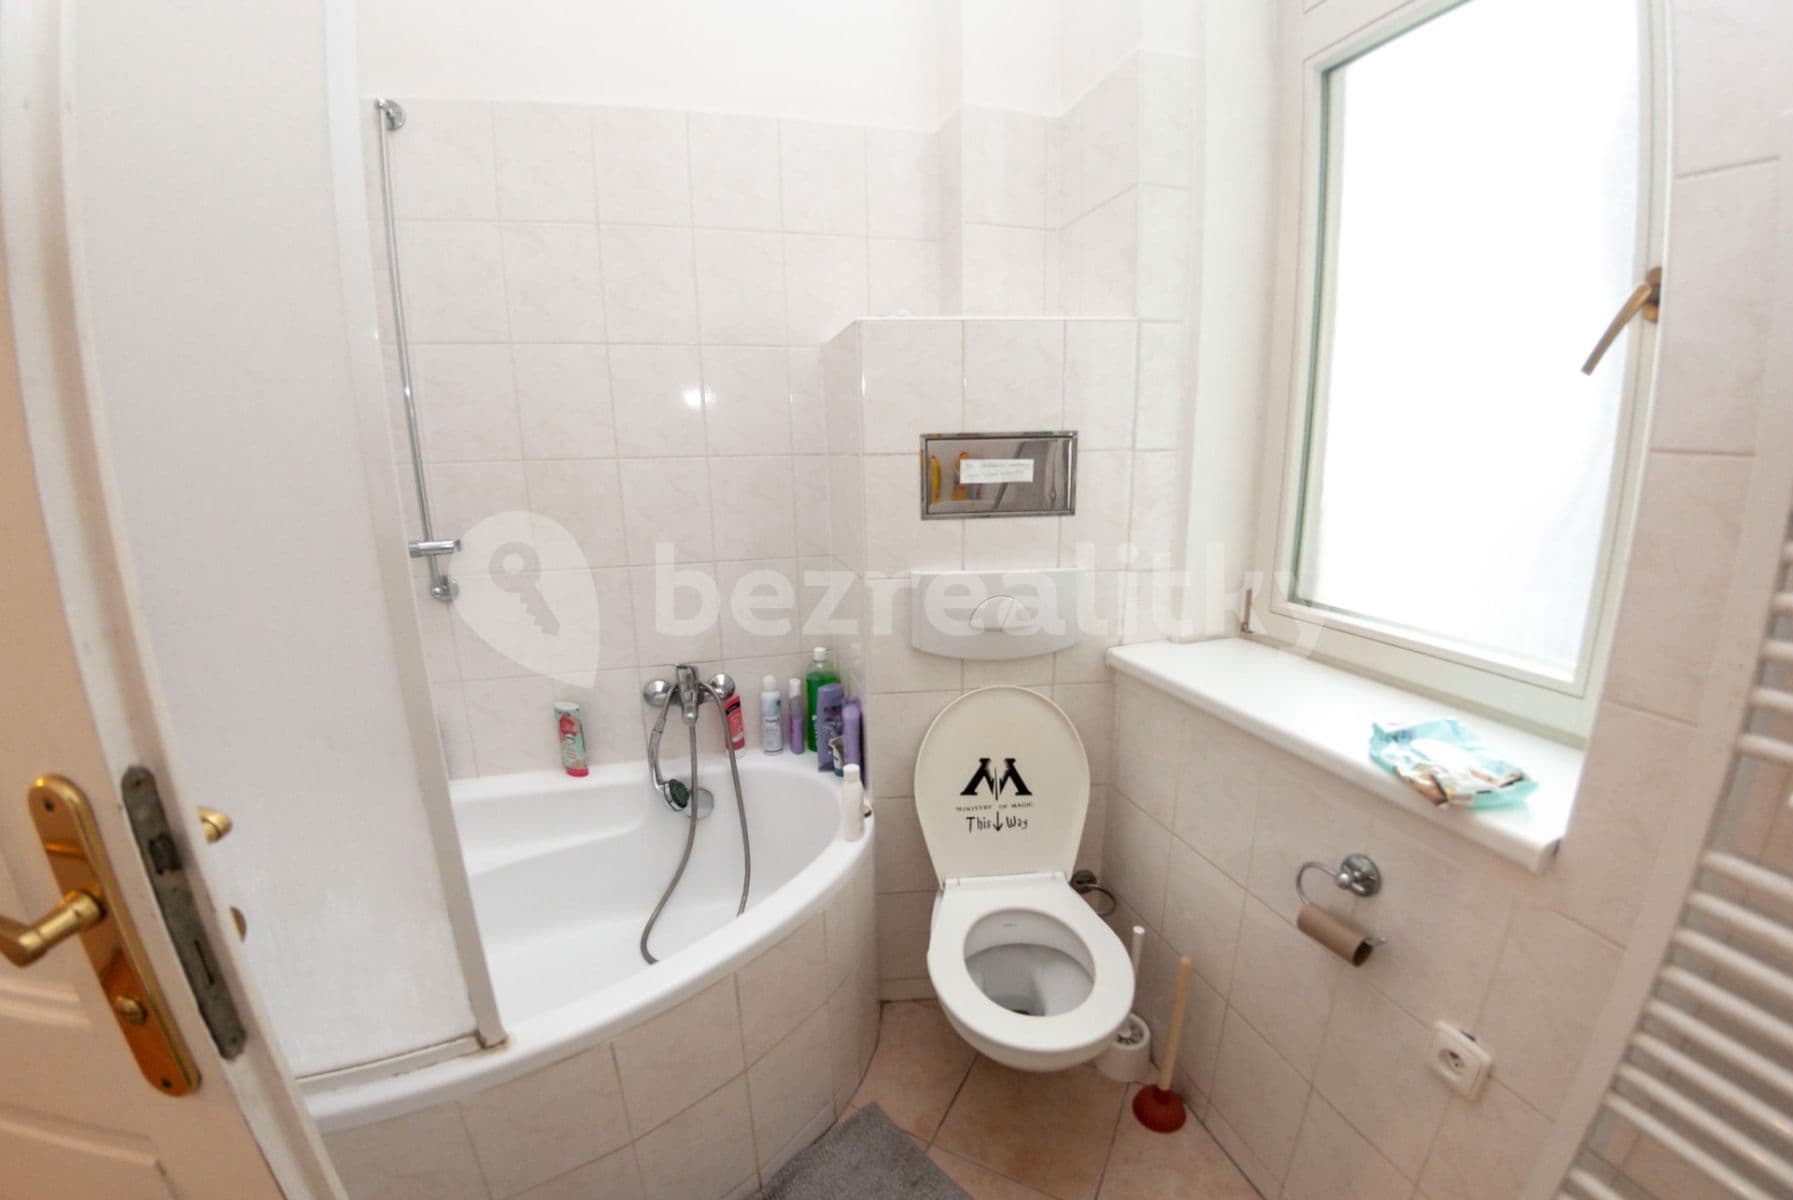 4 bedroom flat to rent, 25 m², Kunzova, Brno, Jihomoravský Region